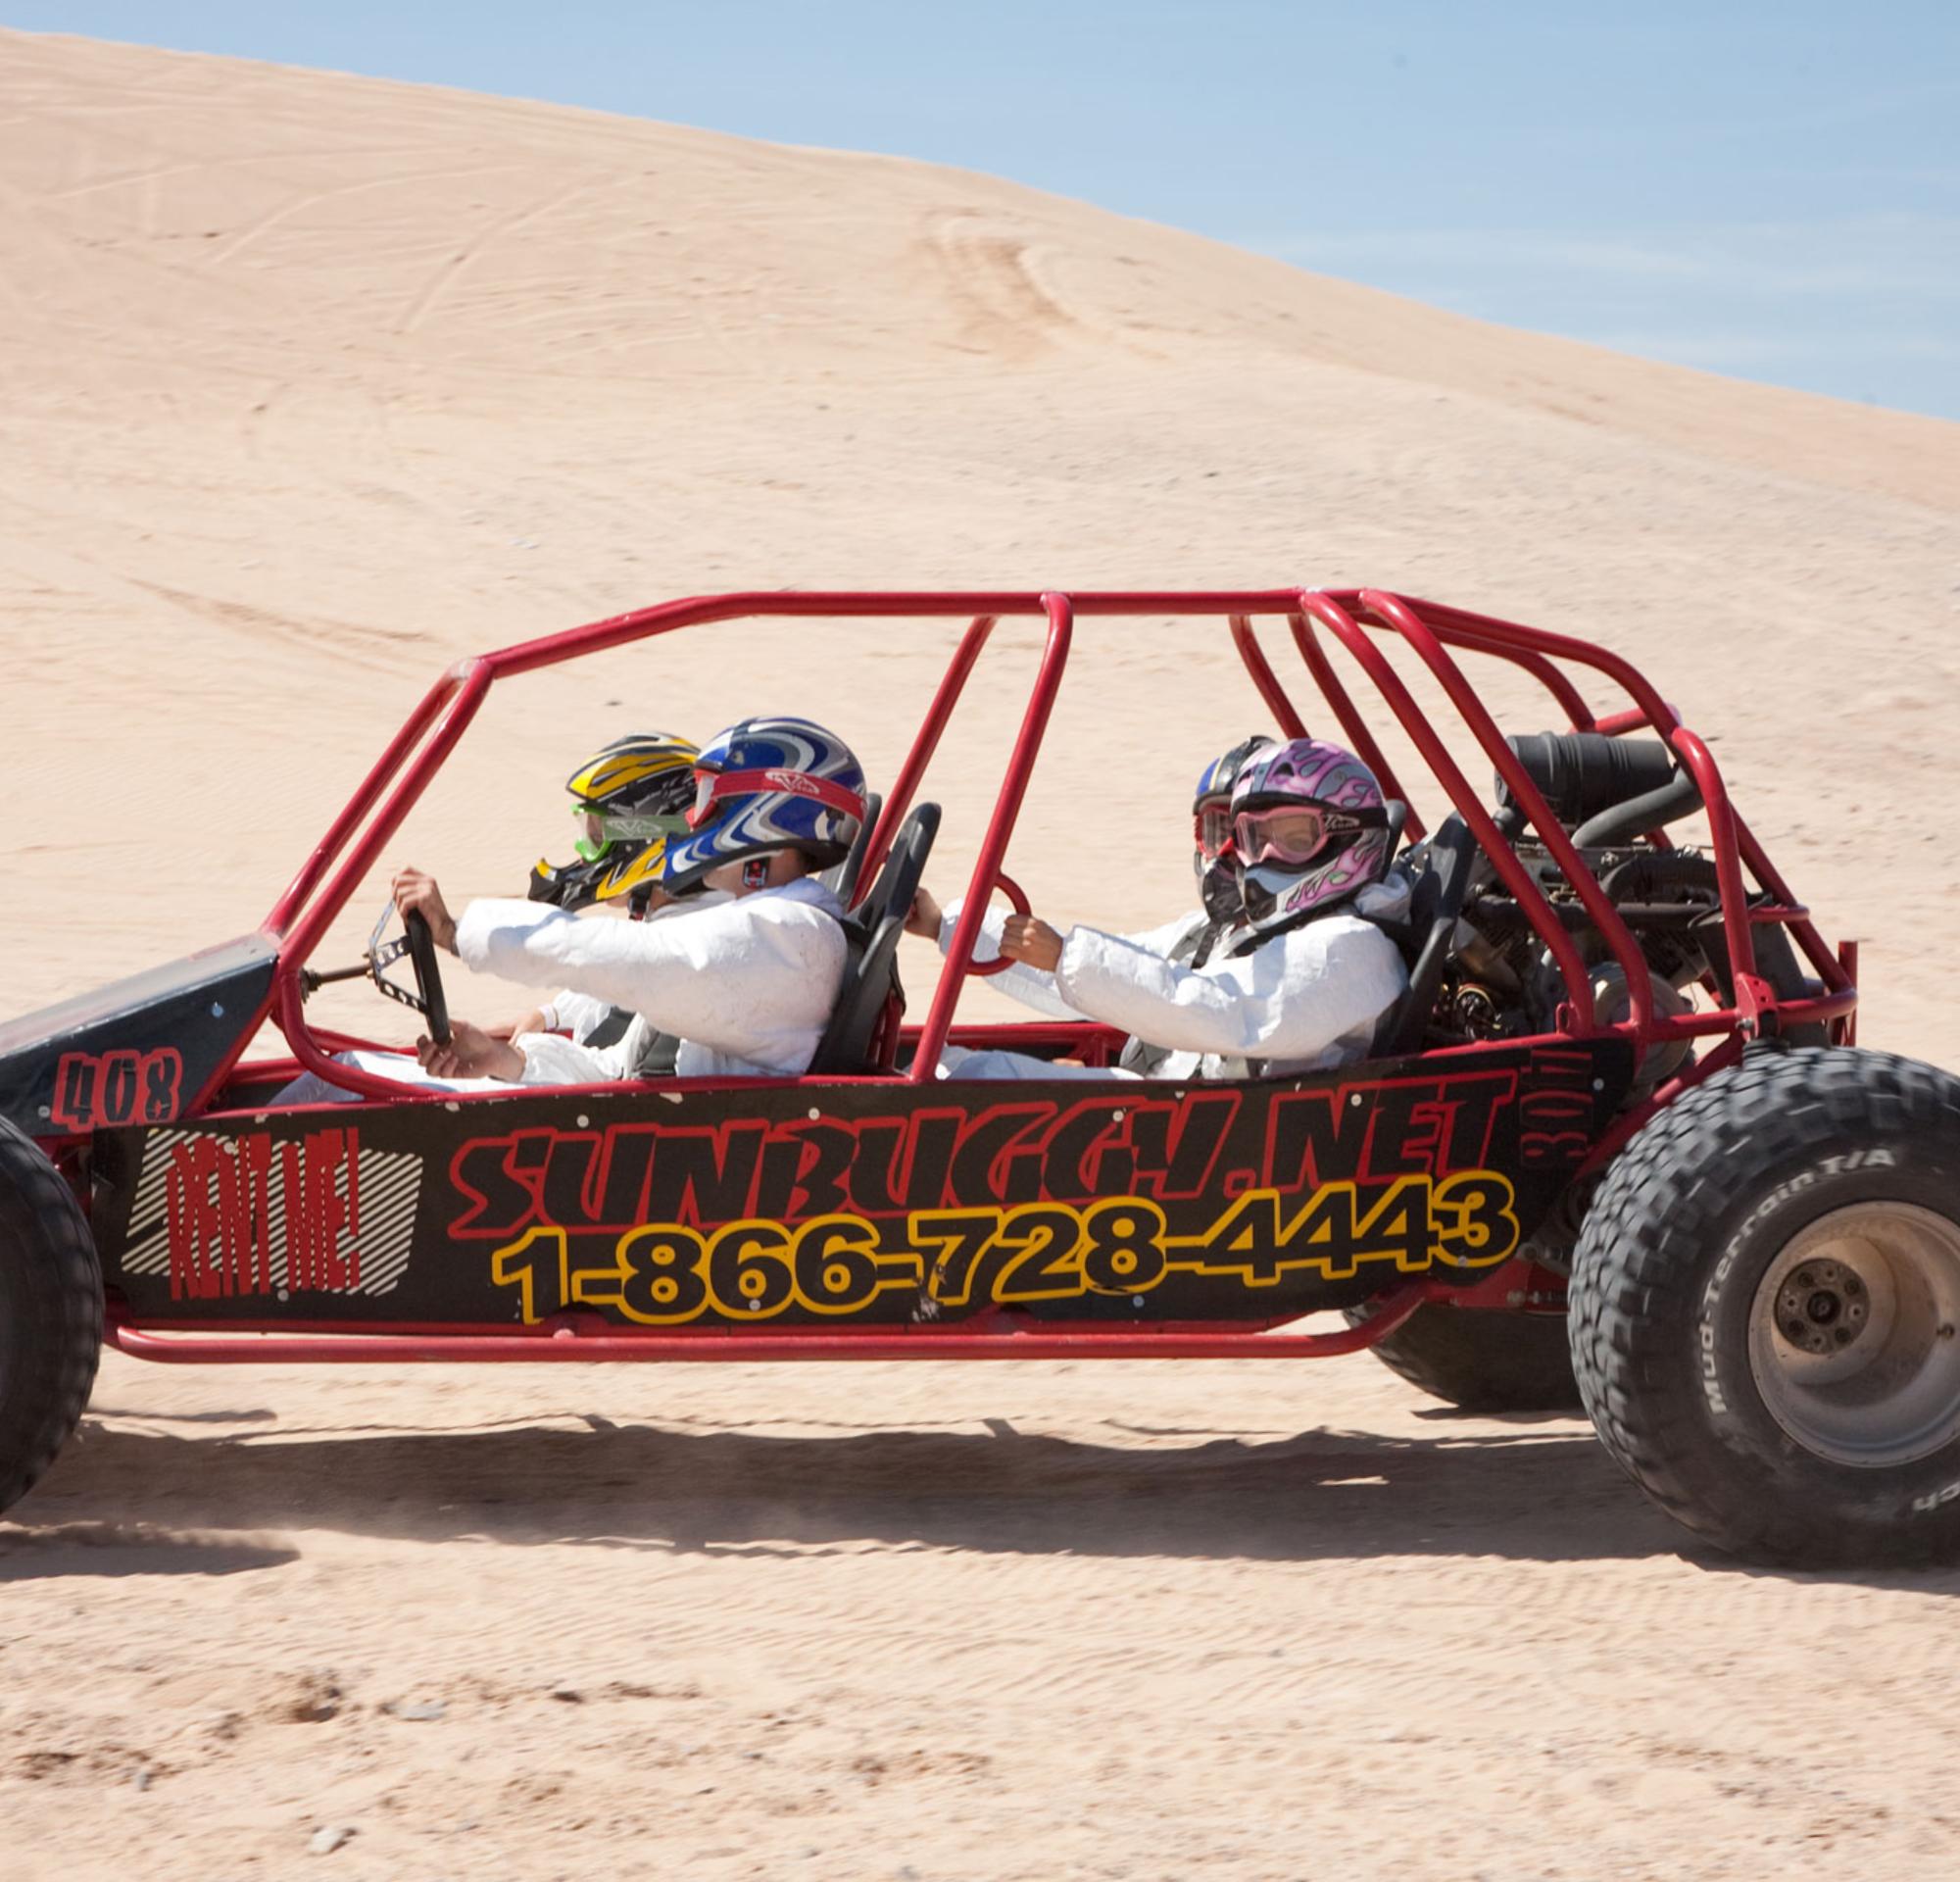 Dune Buggy ride